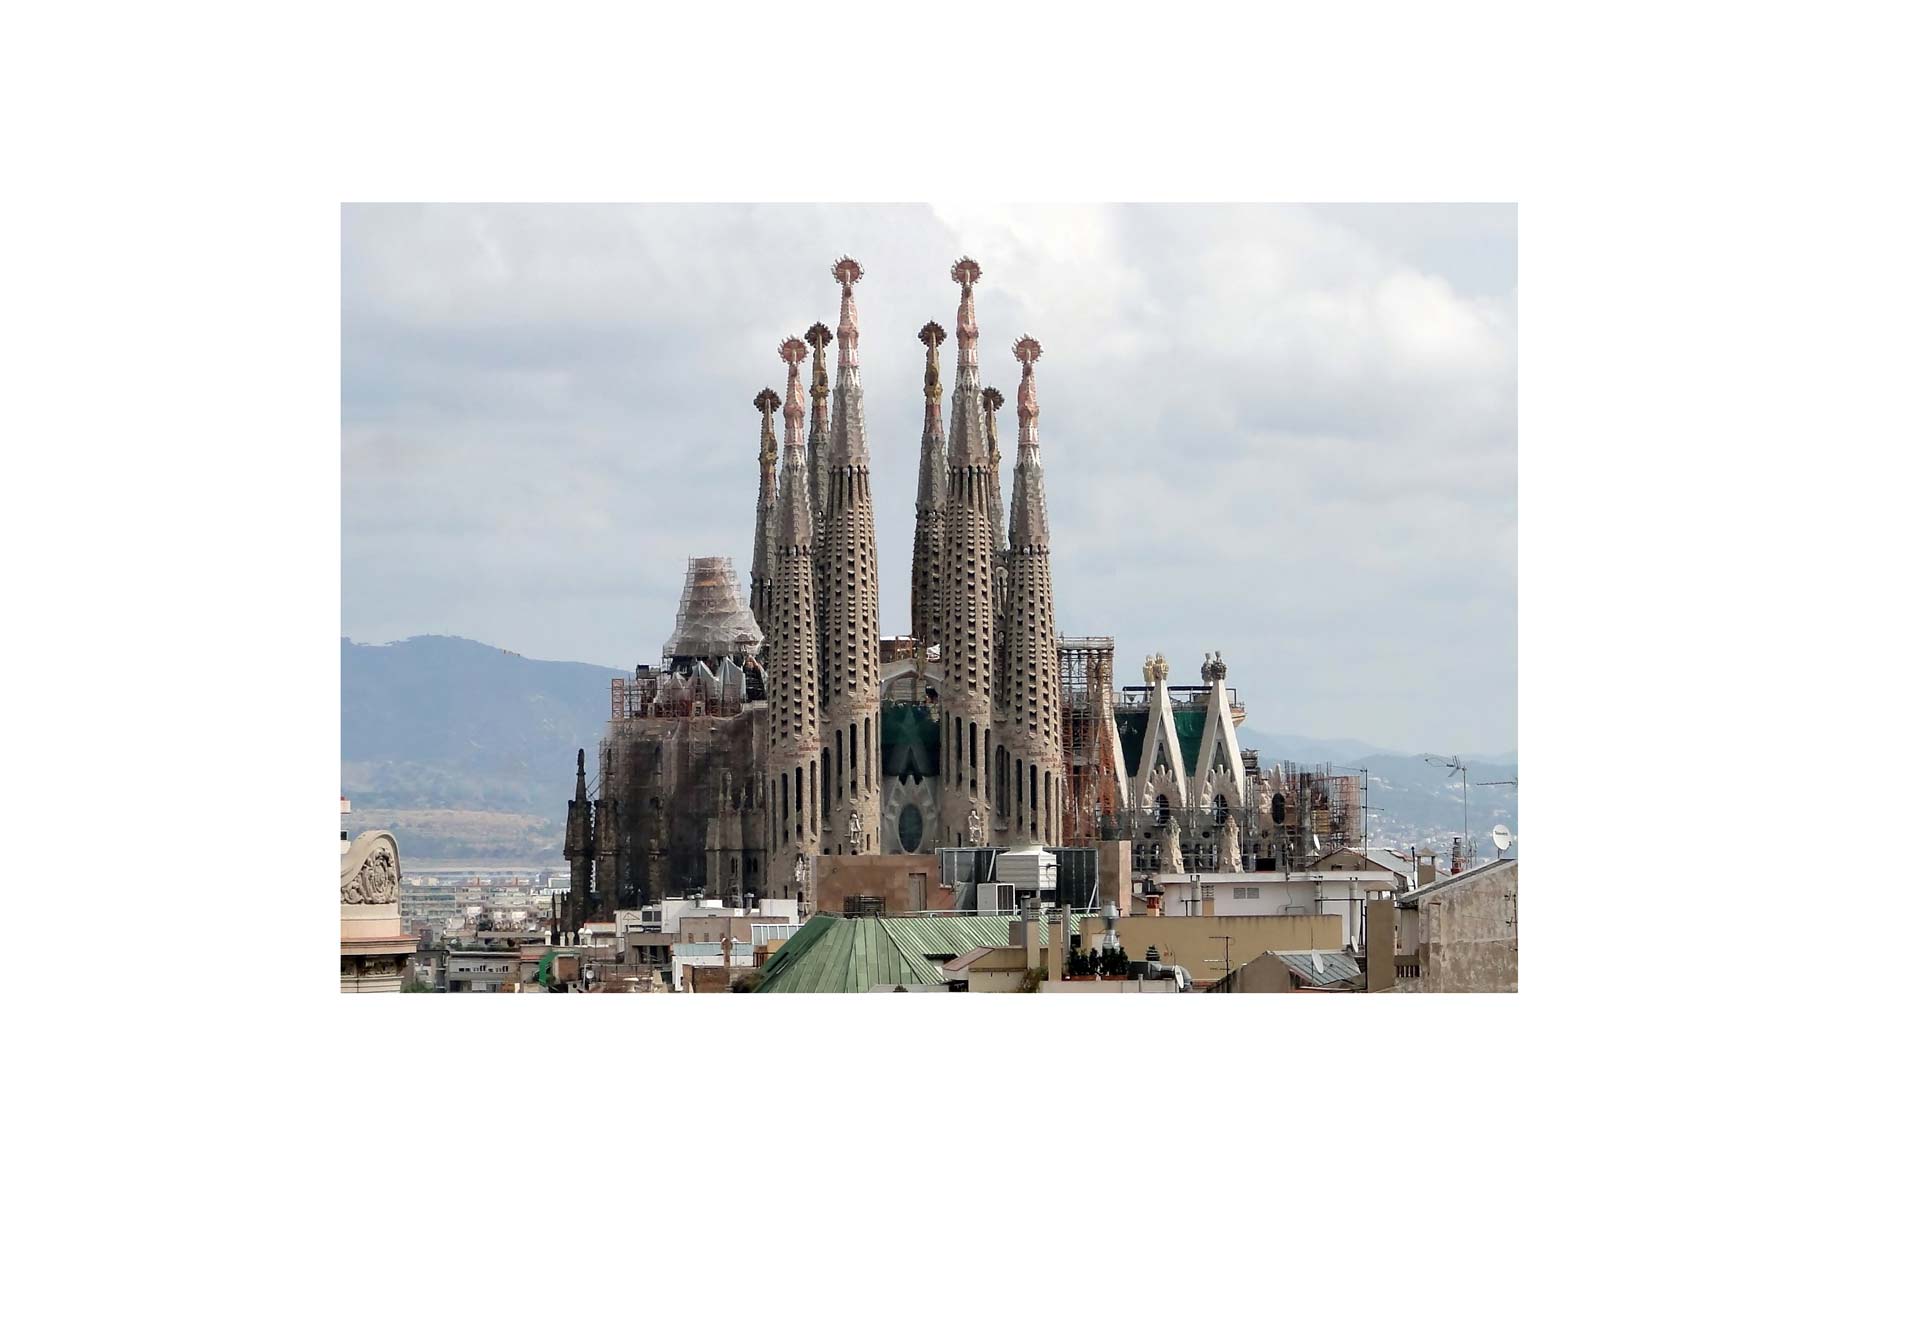 Sagrada Familia estará lista en 2026